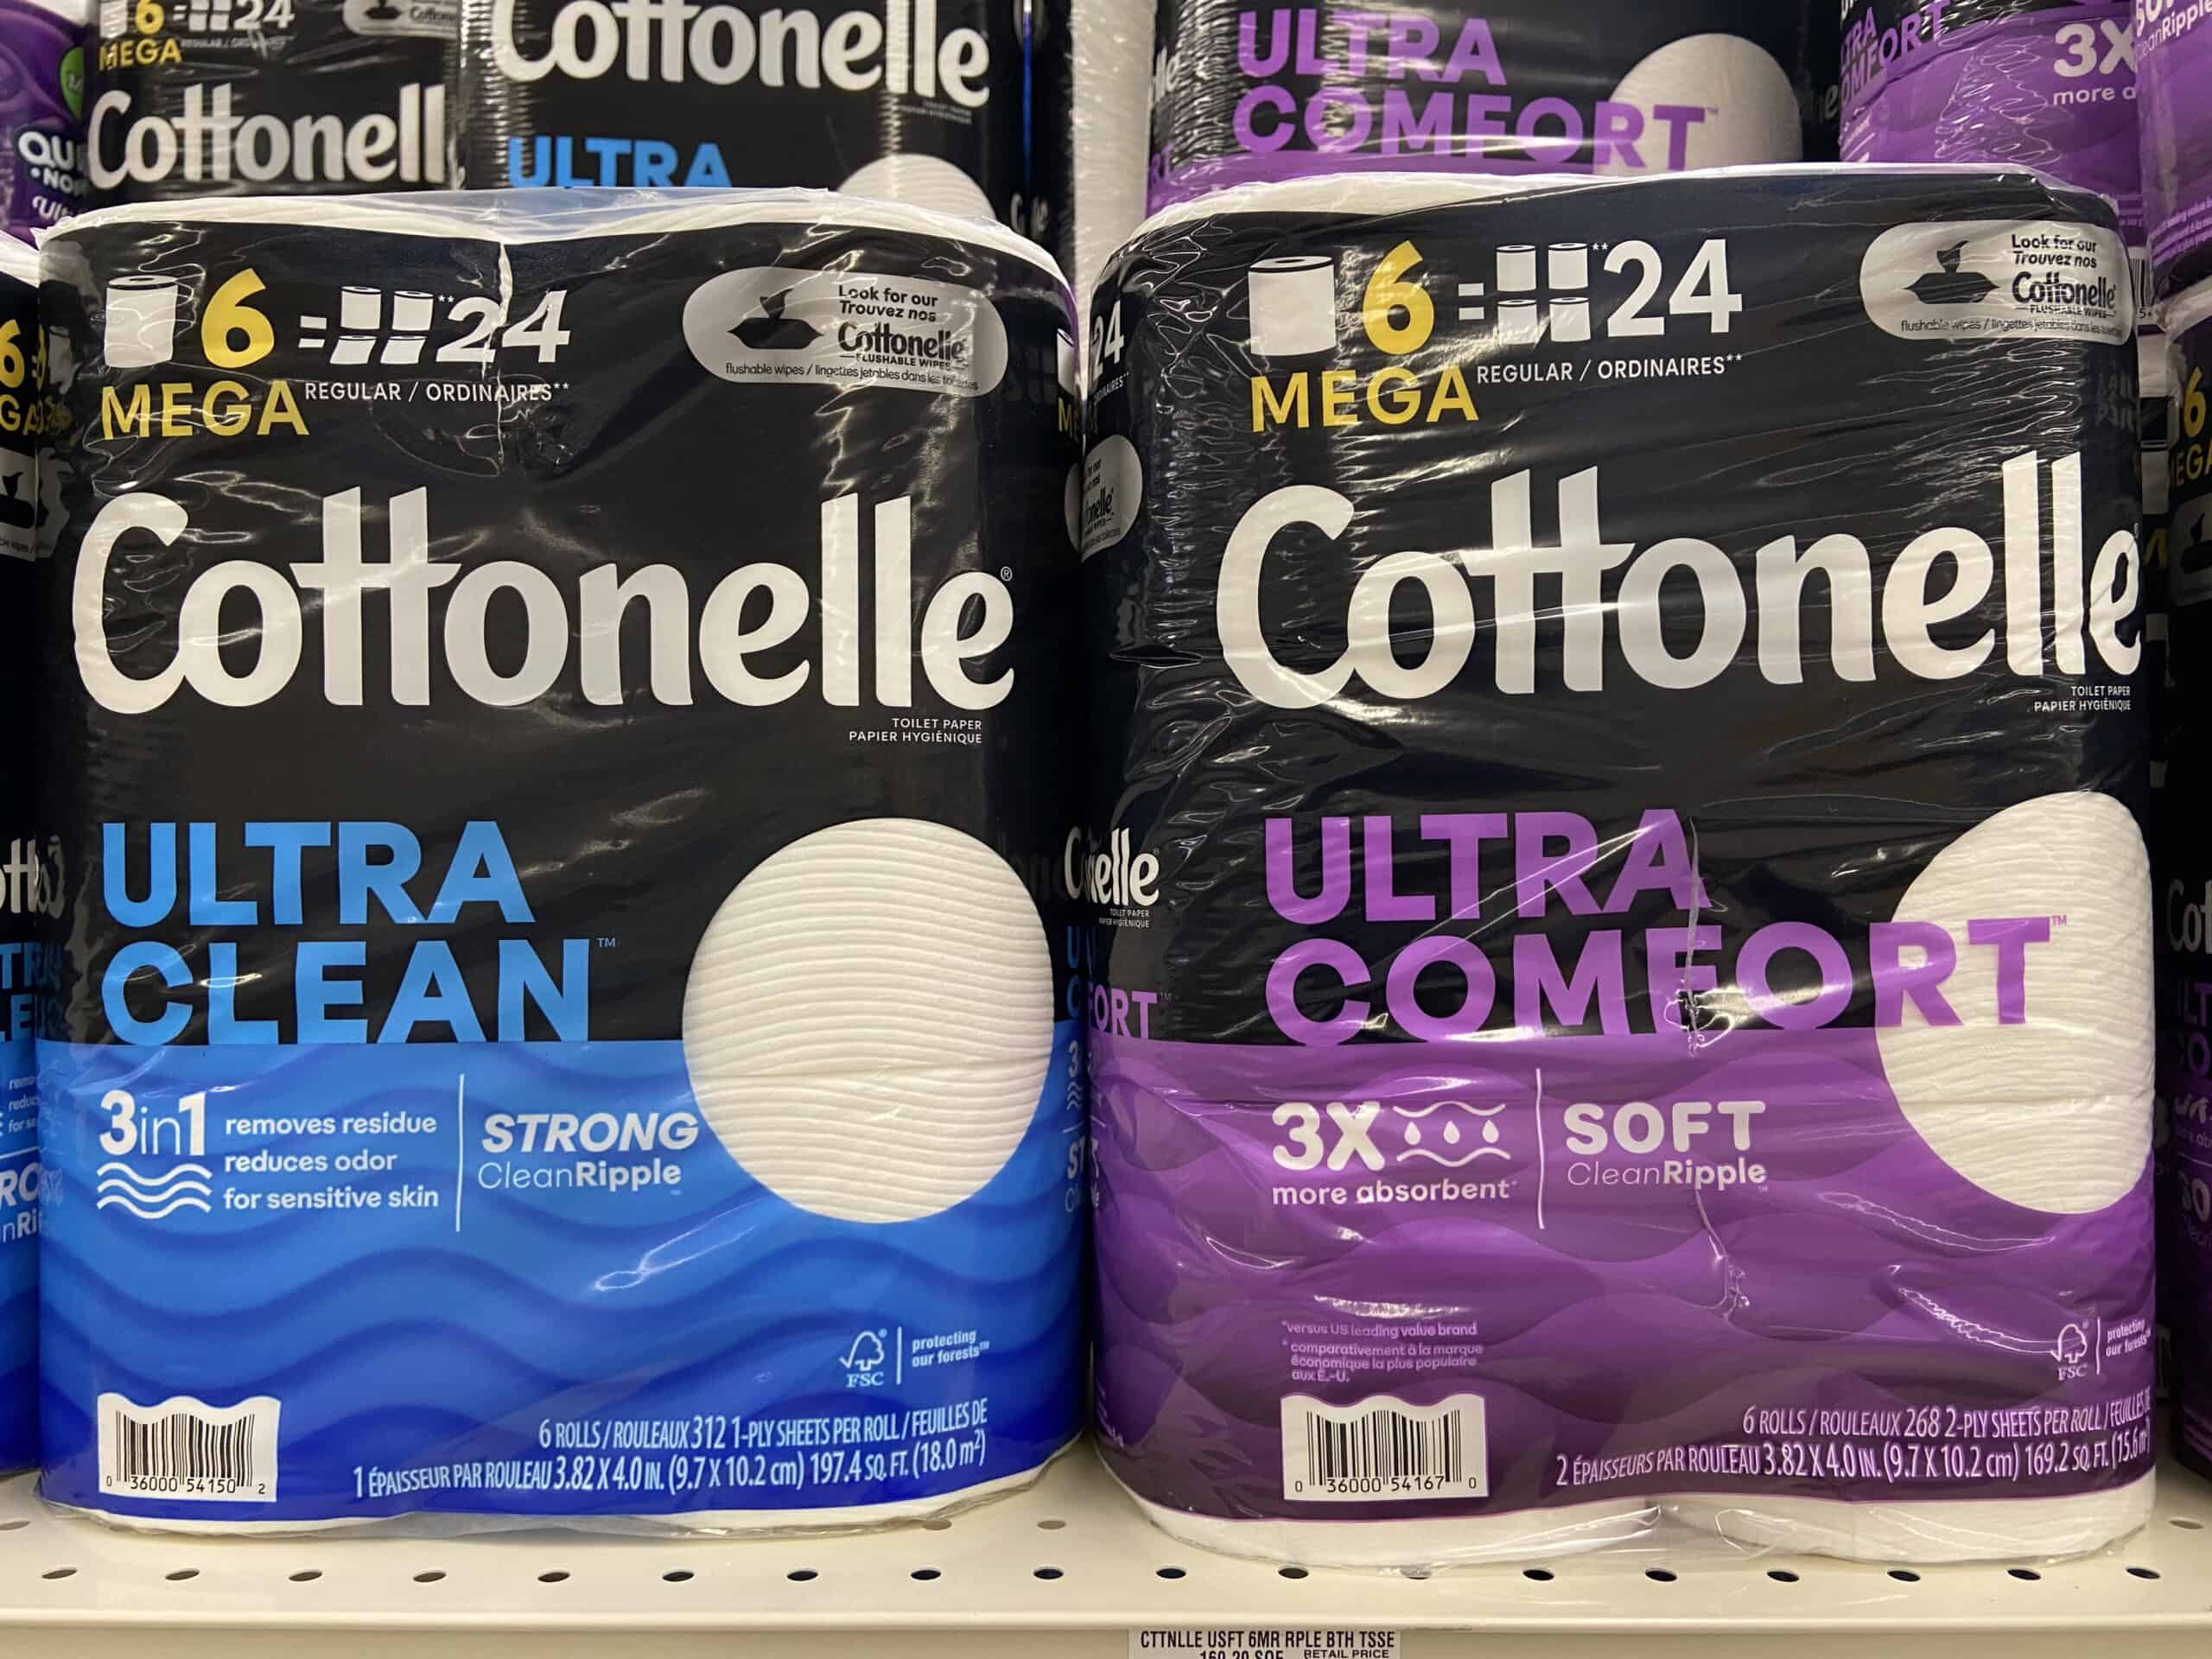 ShopRite-Deal-on-Cottonelle-Bath-Tissue-Mega-Roll